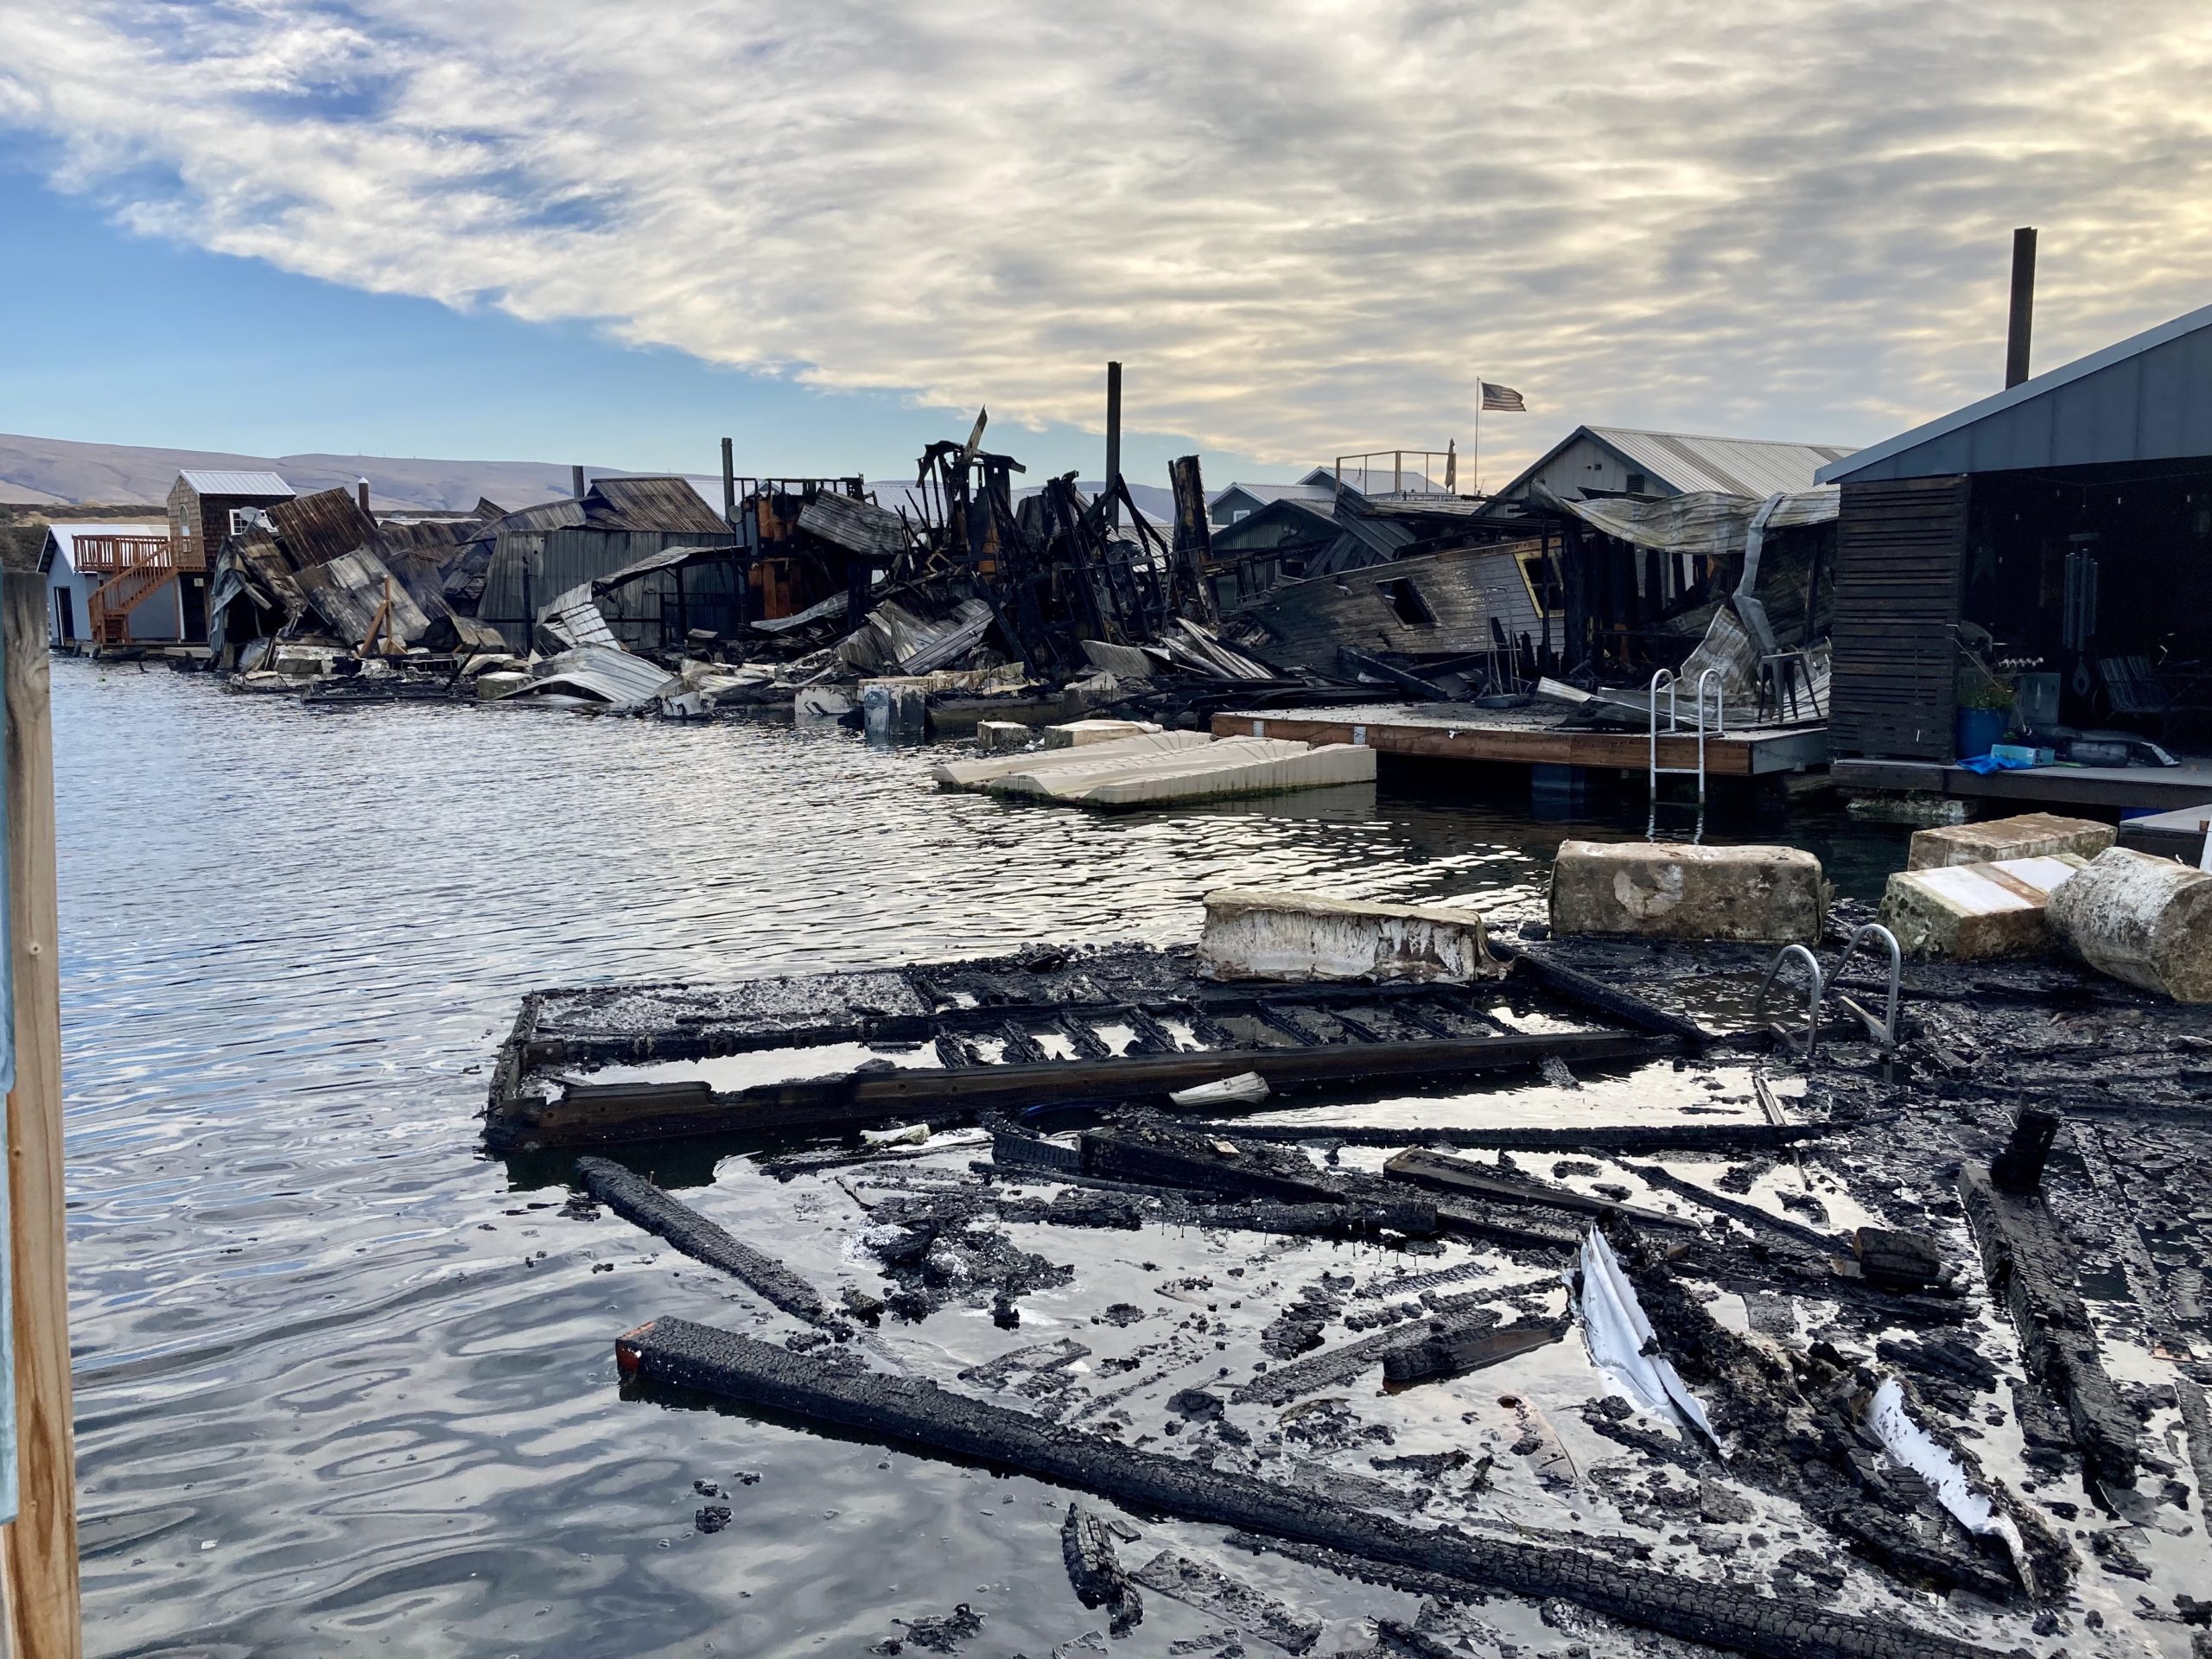 Dalles Marina Fire Damage